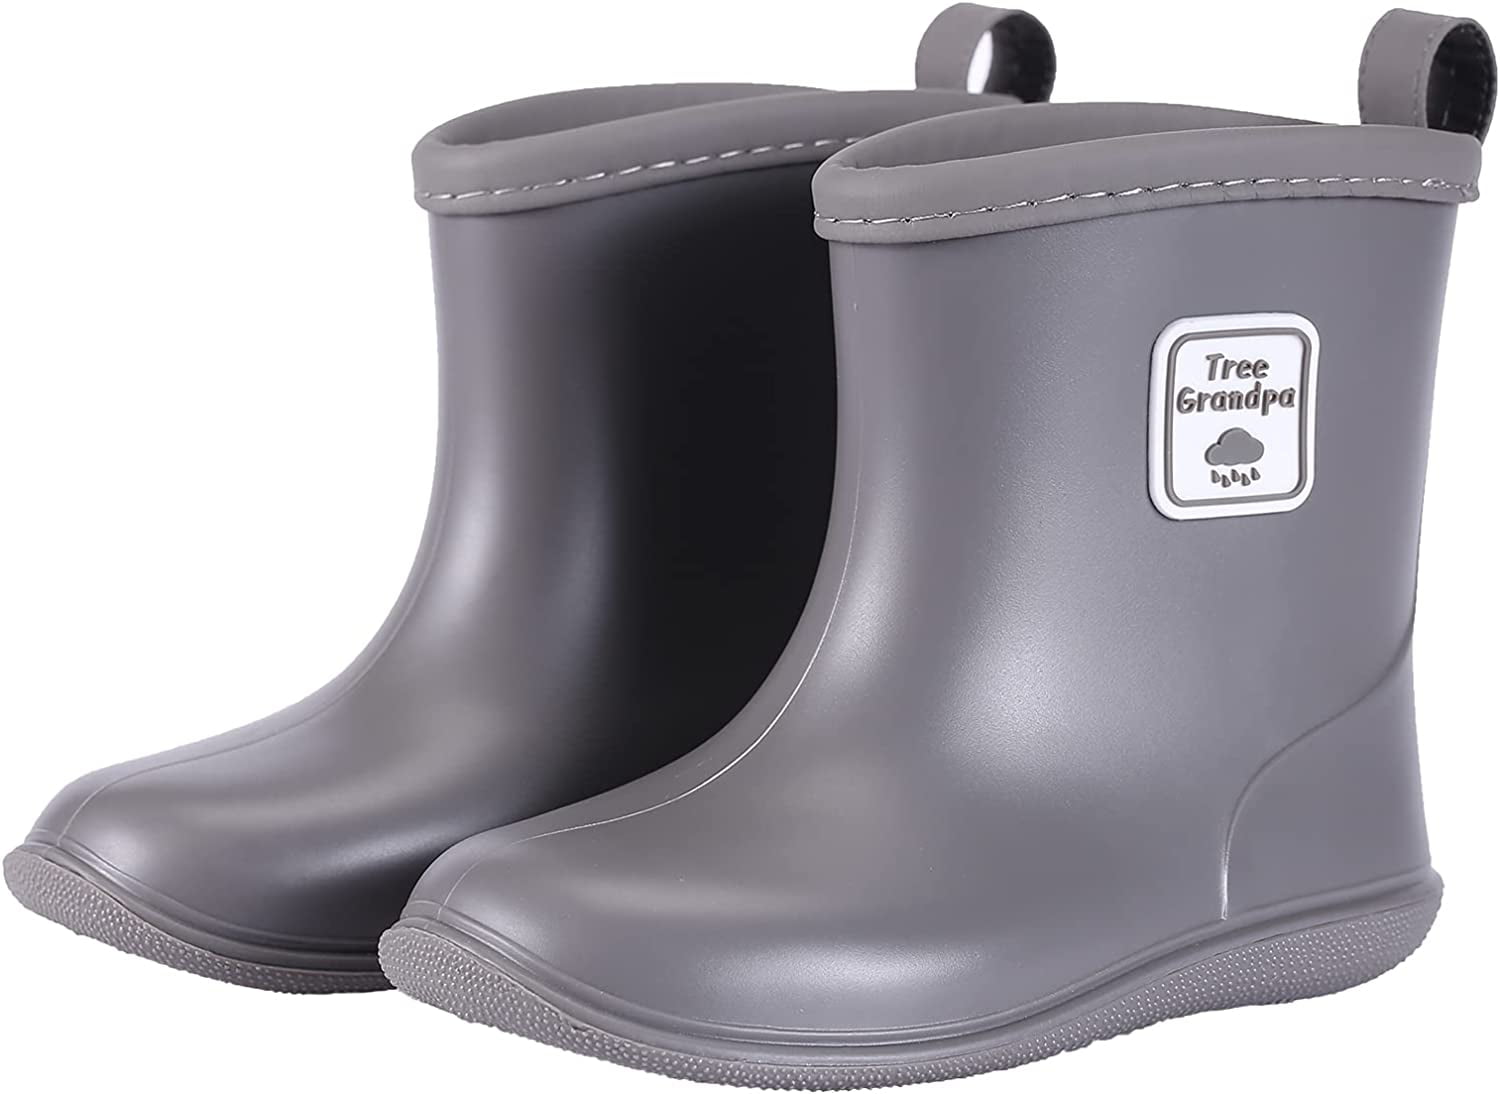 QWZNDZGR Toddler Rain Boots for Boys Girls Kids Rain Shoes,Lightweight and Waterproof Baby rain boots with on - Walmart.com